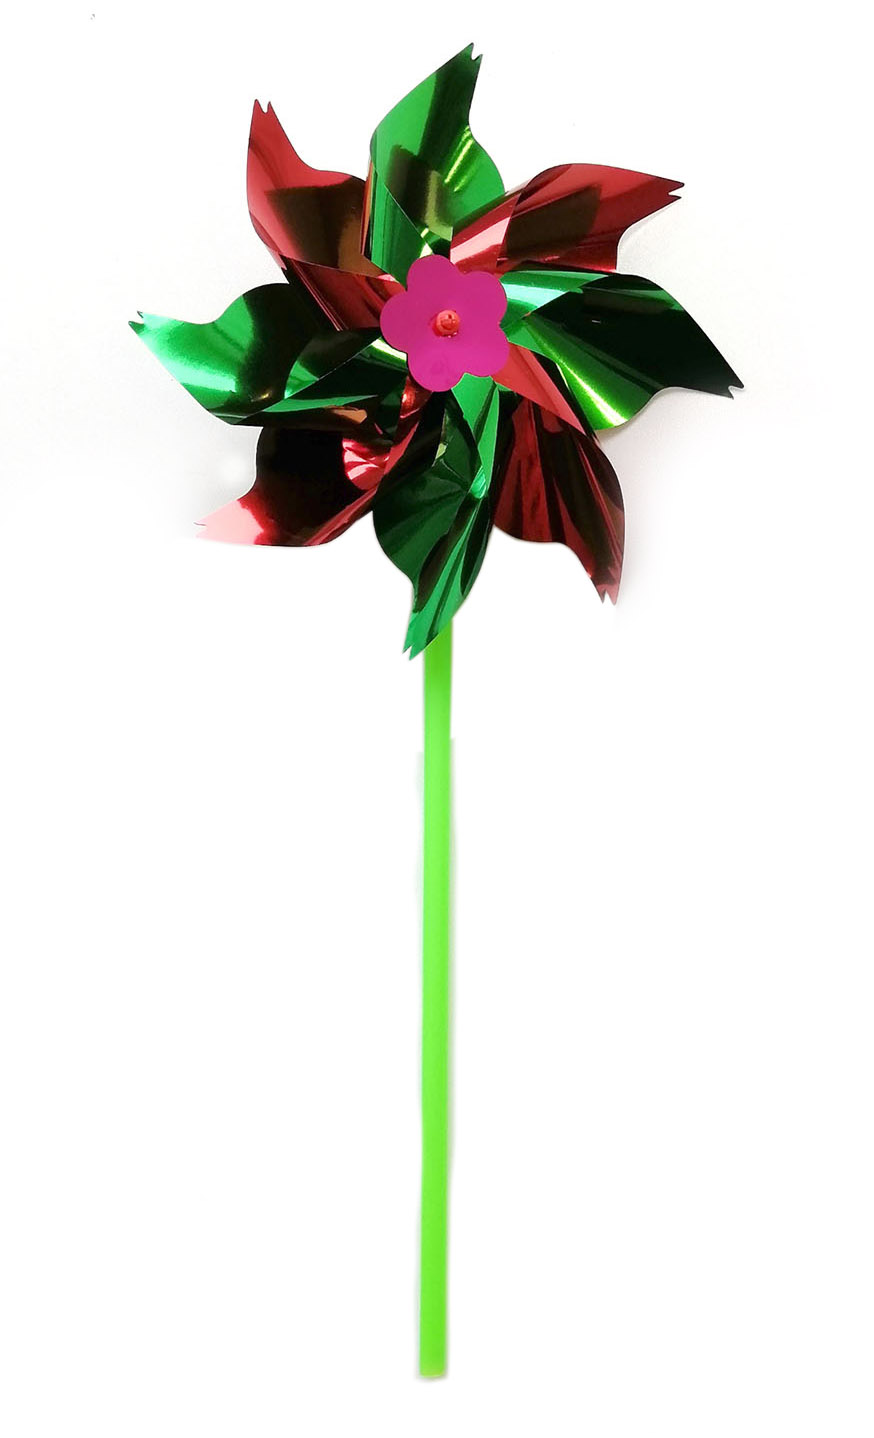 Серия Веселые забавы: Ветерок (28 см) 1 цветок (в пакете) (Арт. AN02813)